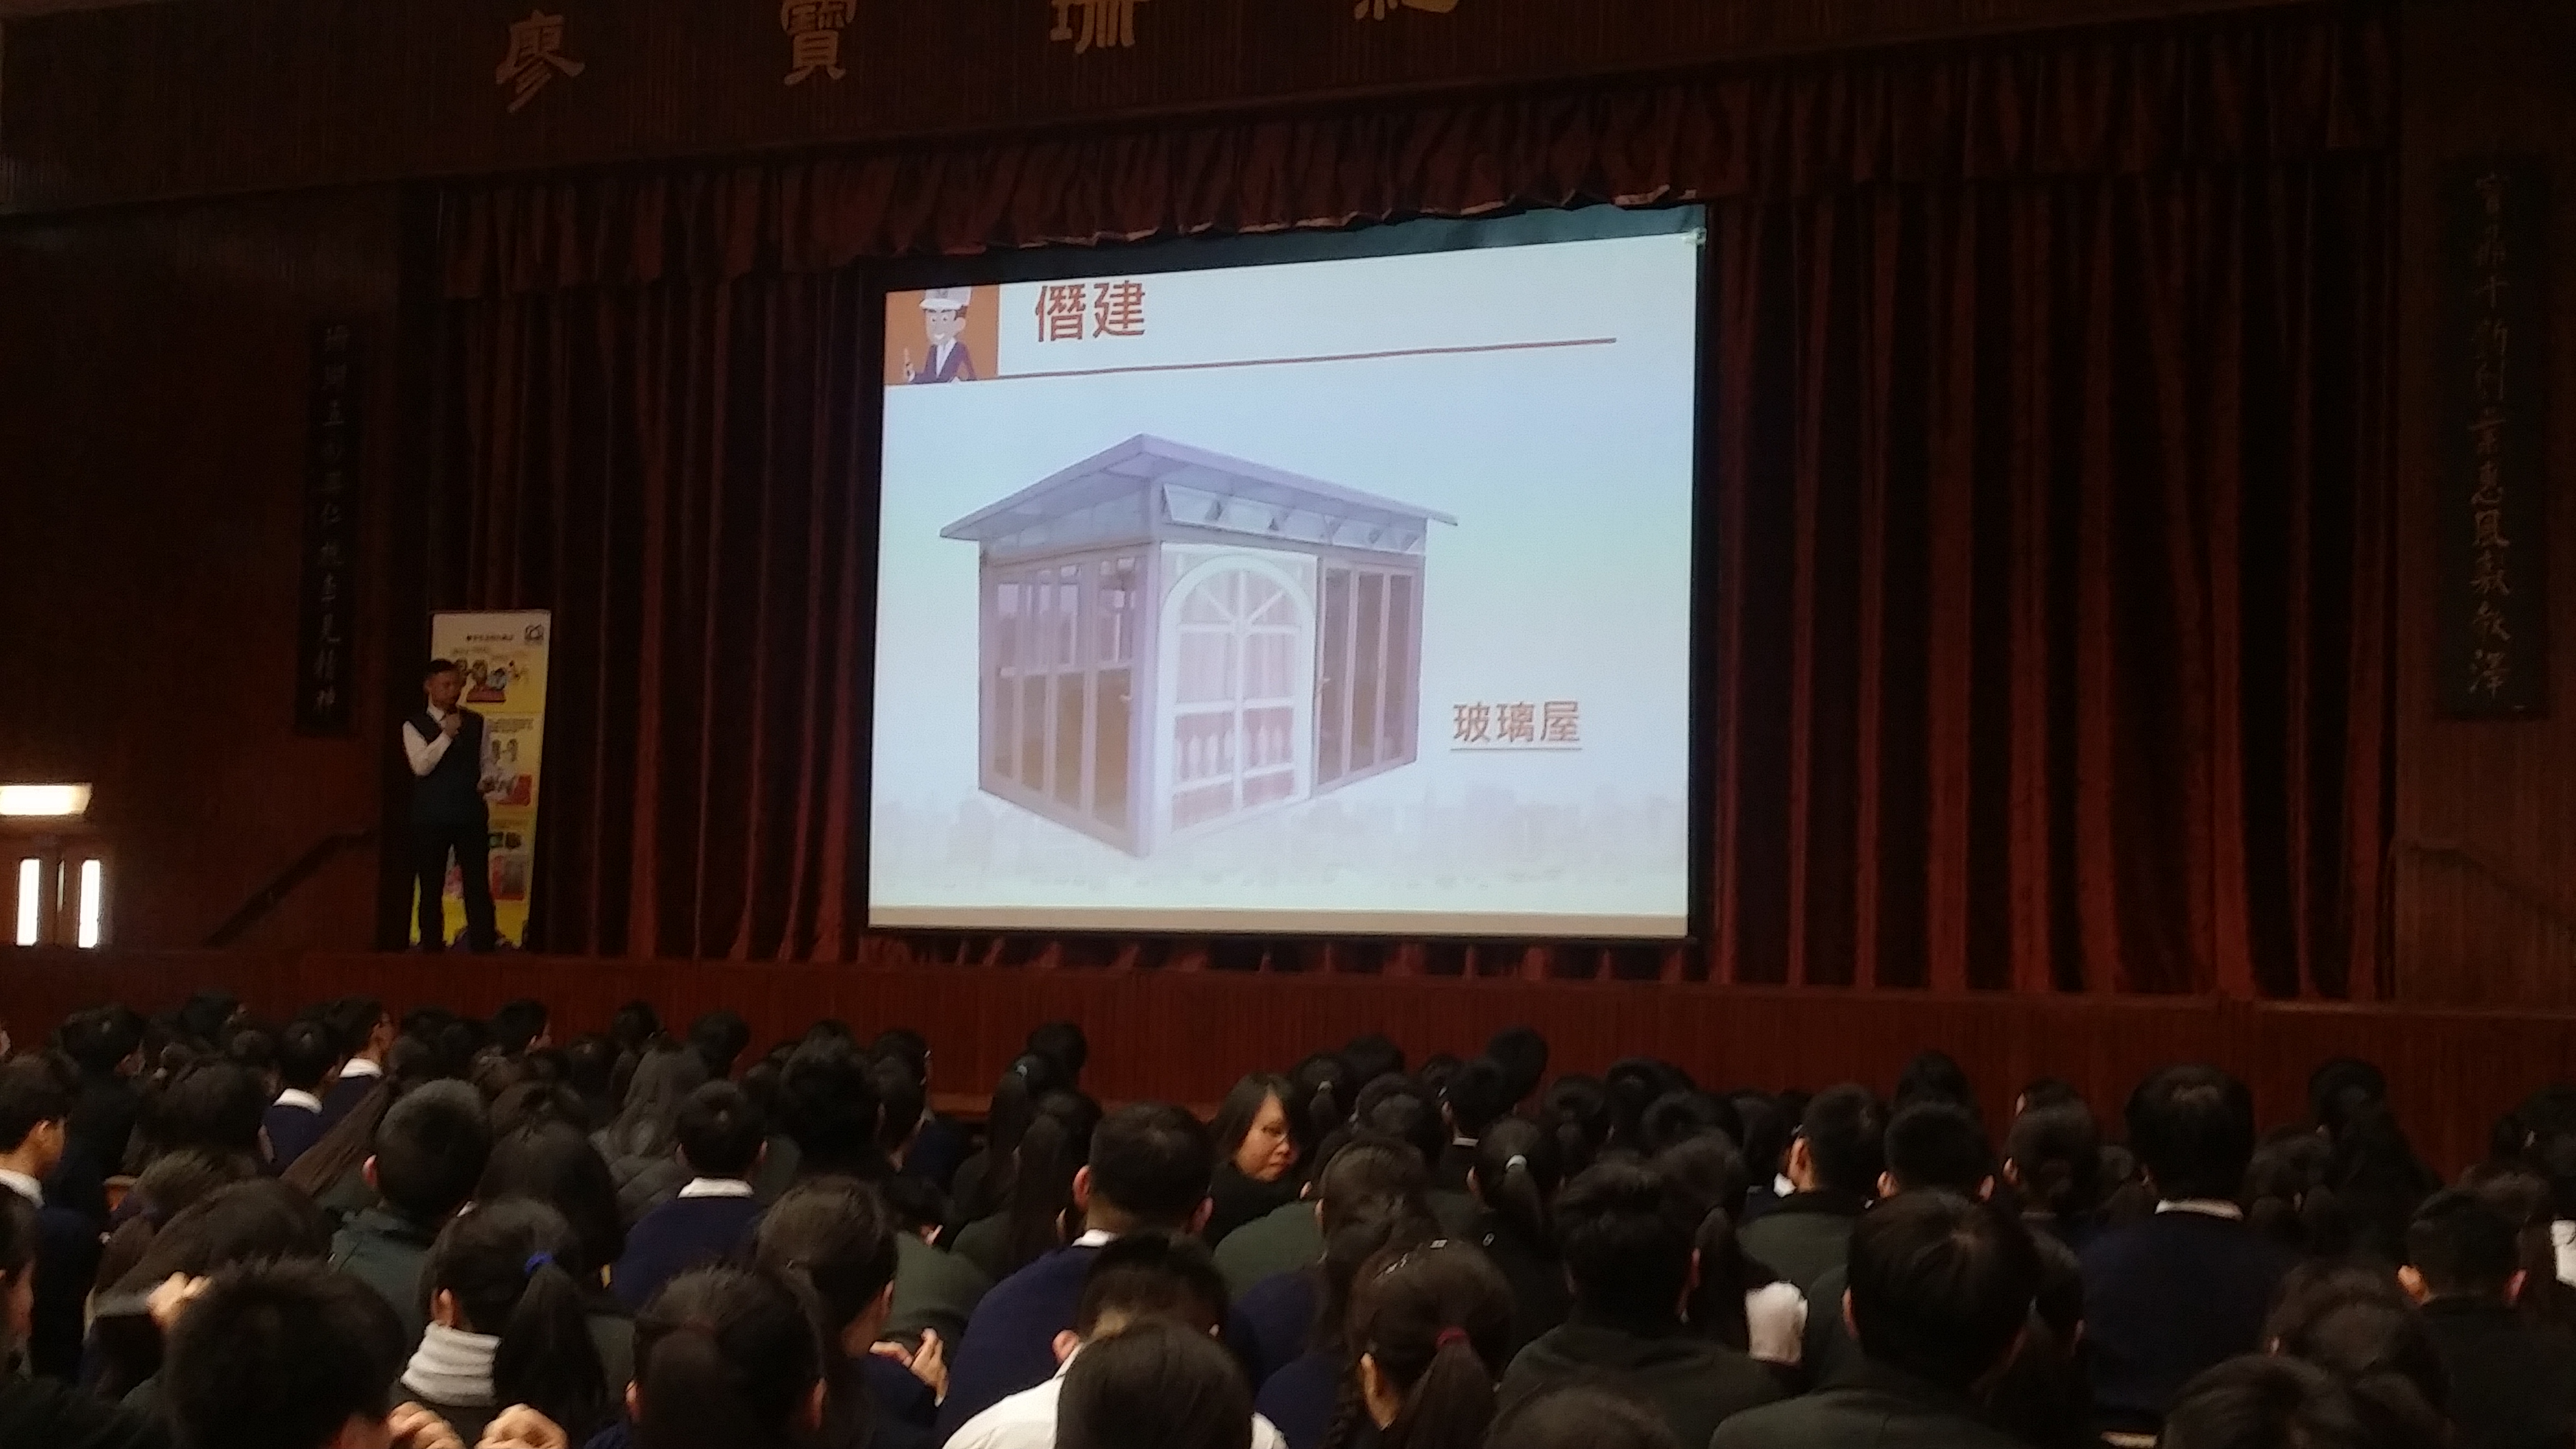 Liu Po Shan Memorial College